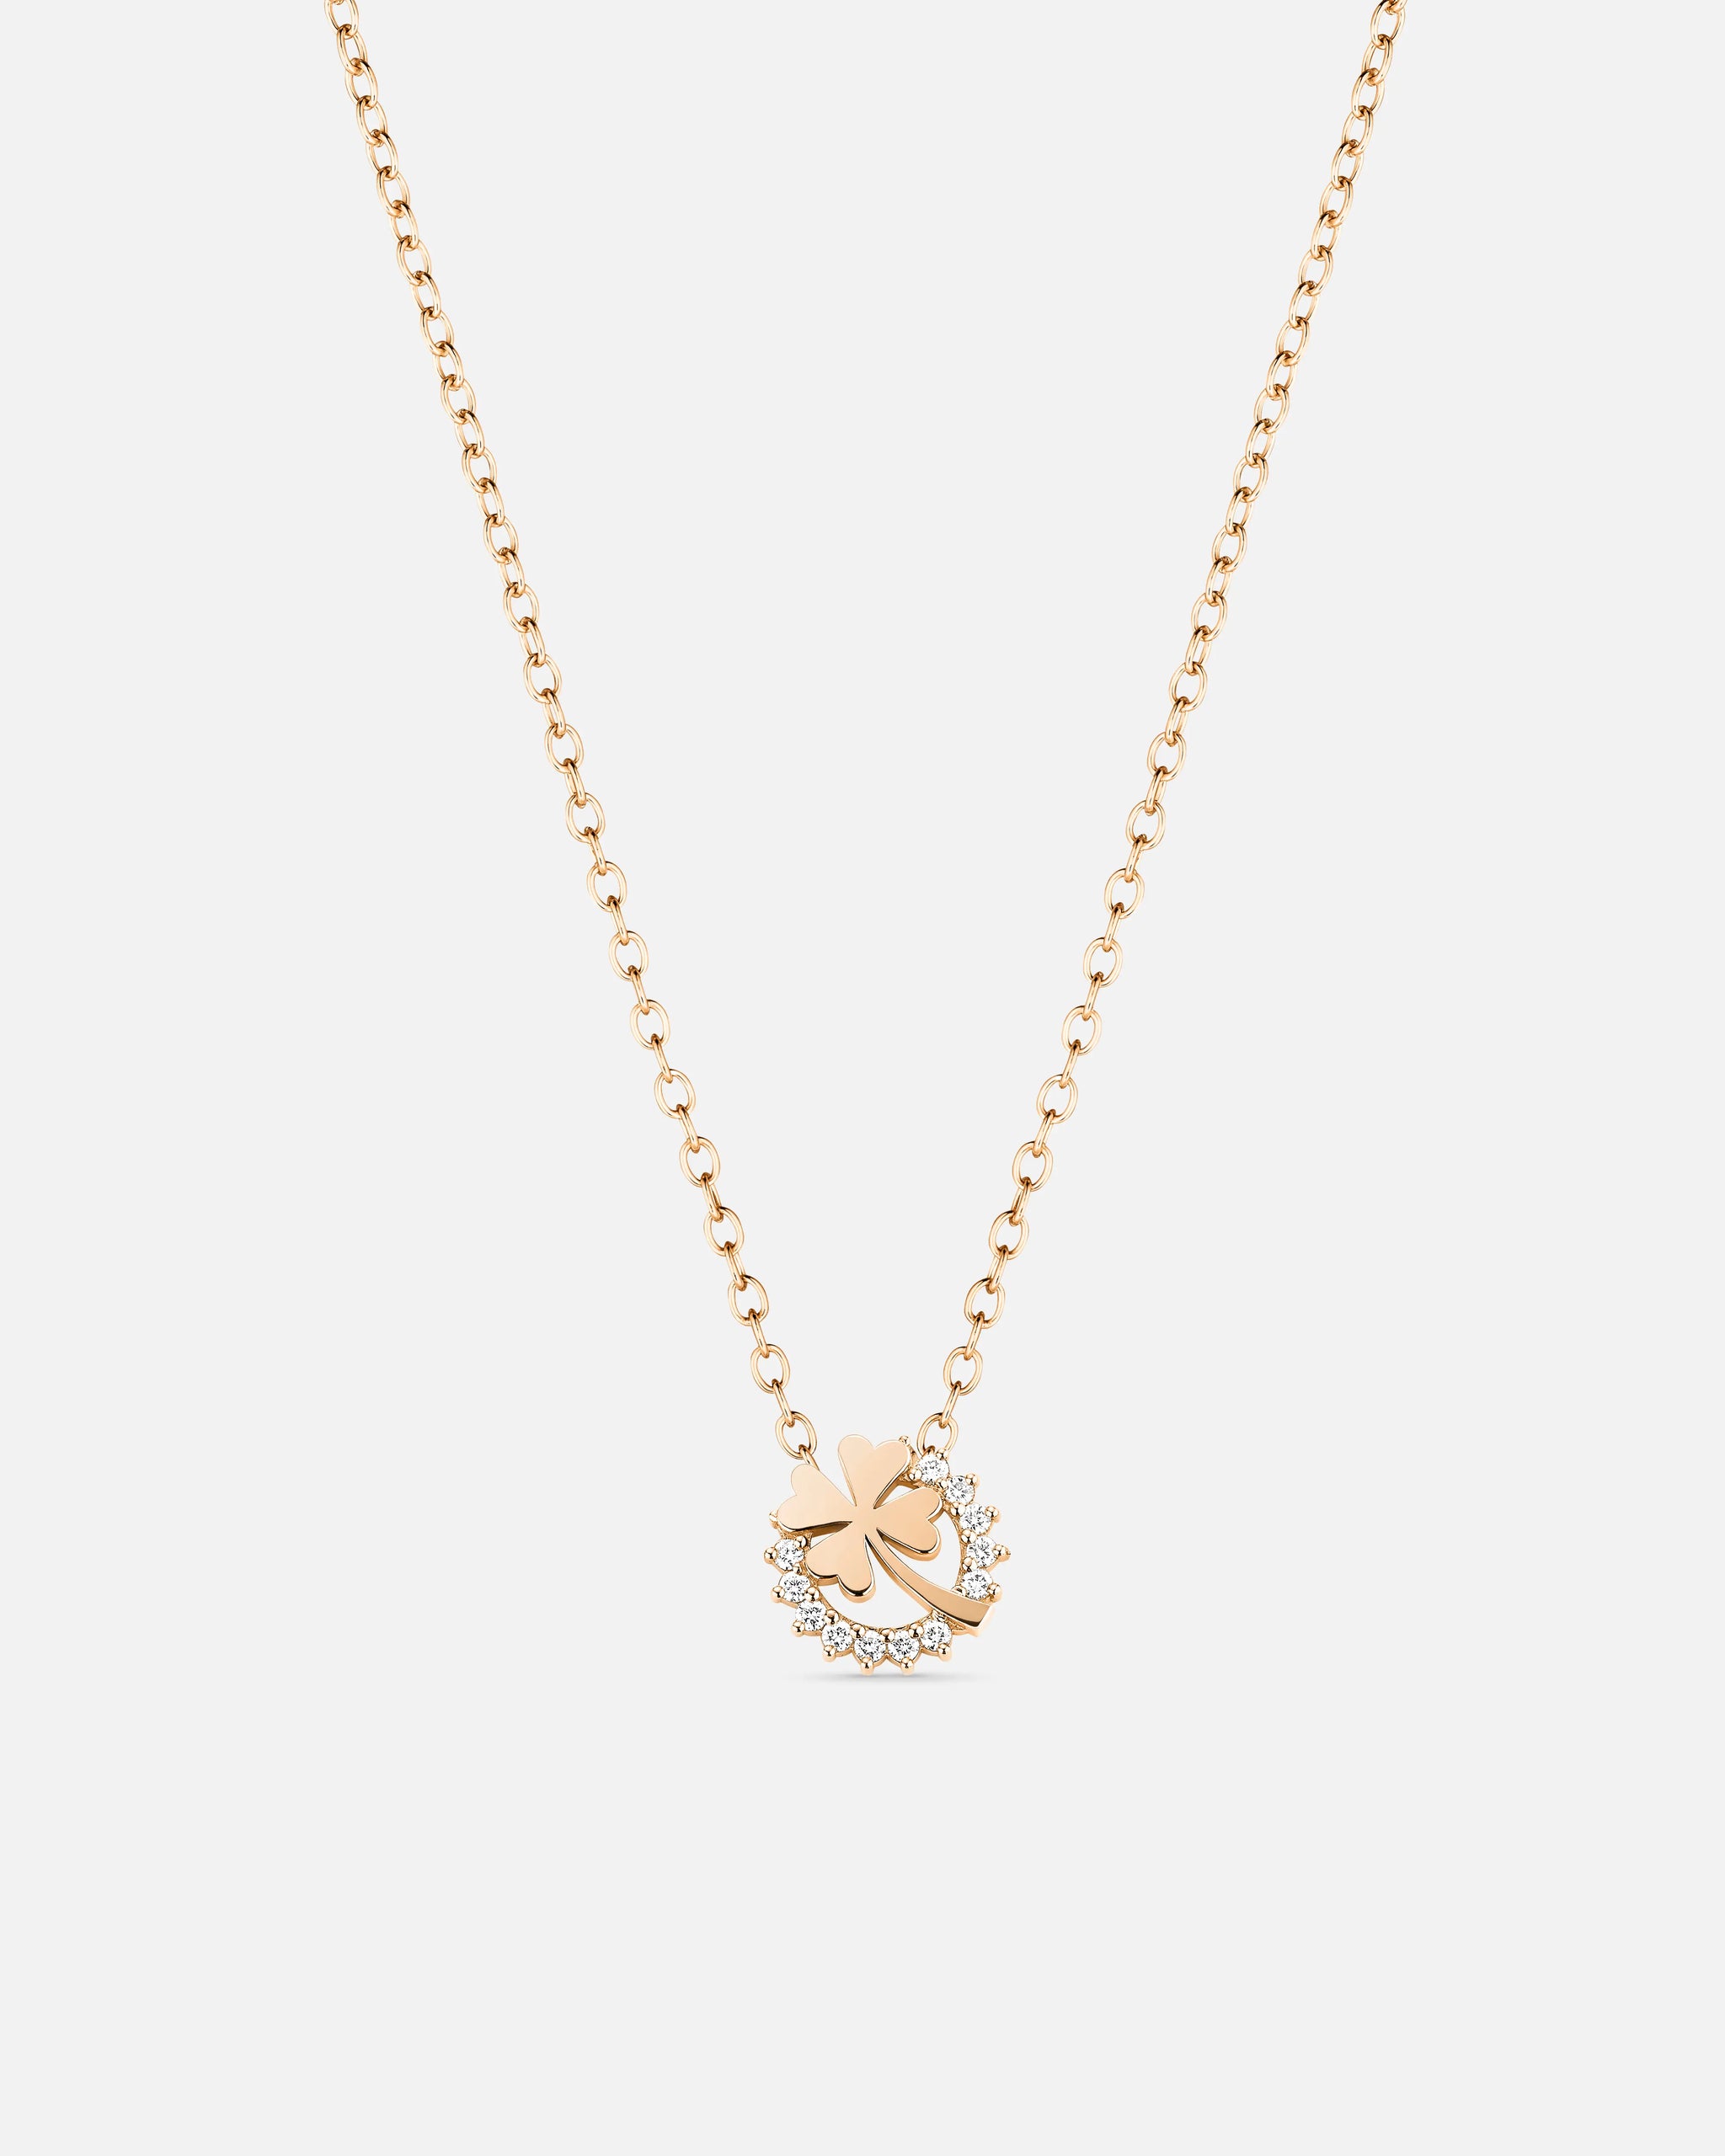 Medium Luck Pendant in Rose Gold - 1 - Nouvel Heritage